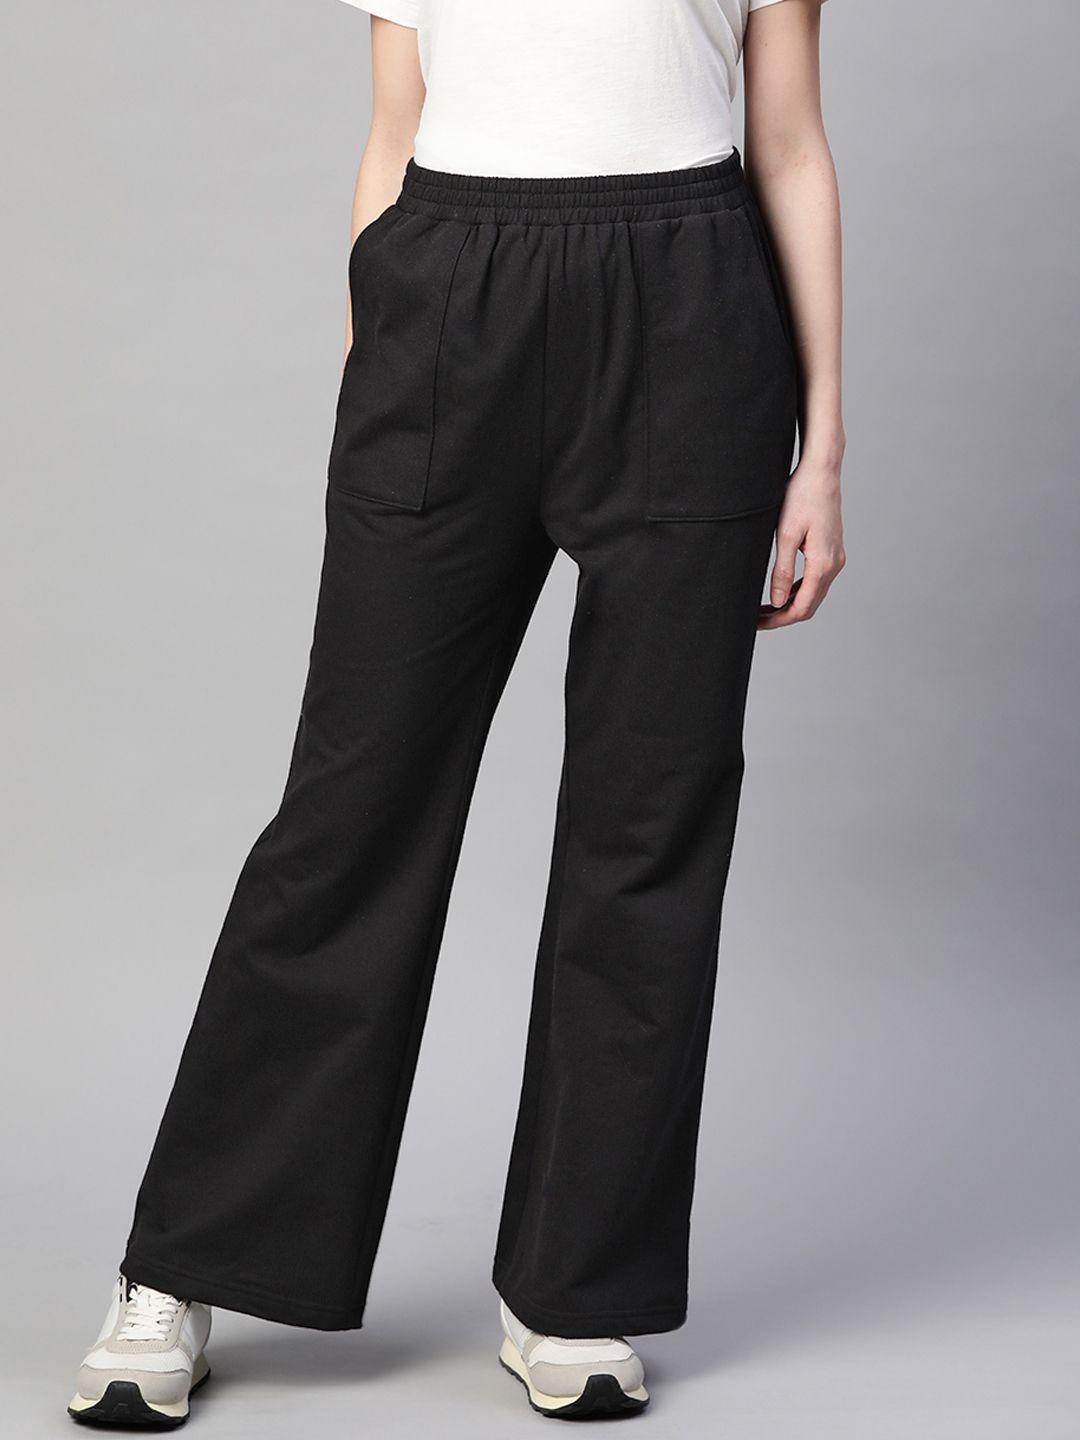 laabha-womens-black-solid-mid-rise-flared-track-pants